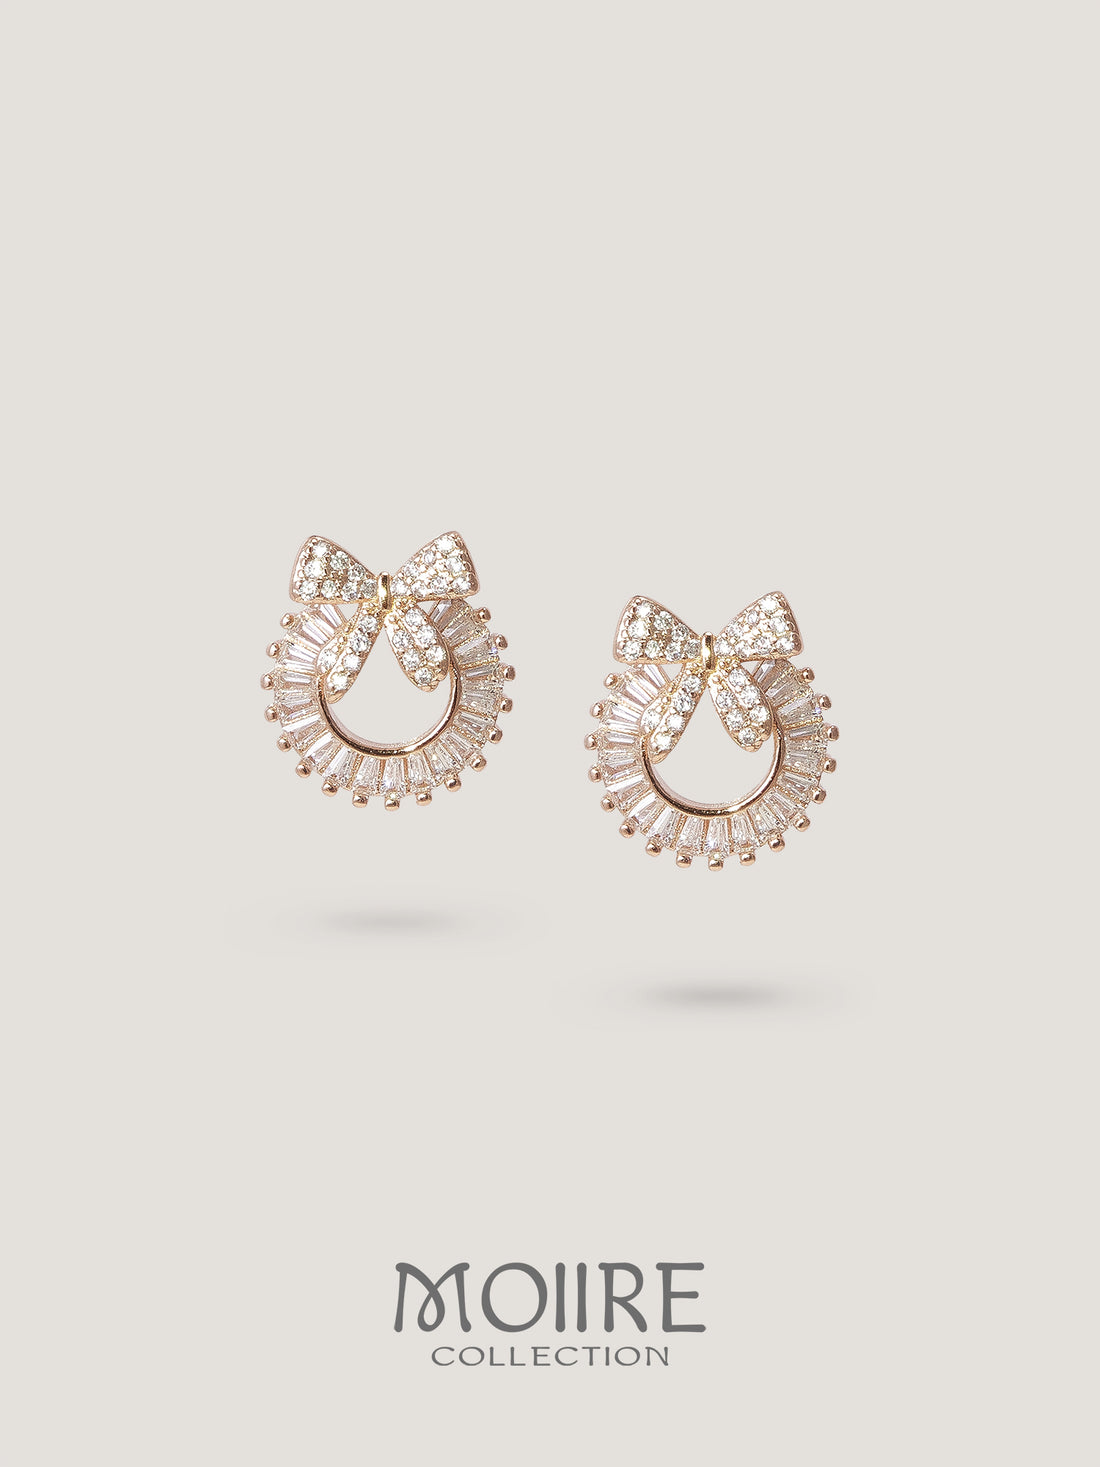 Moiire Jewelry | 燦爛迴向